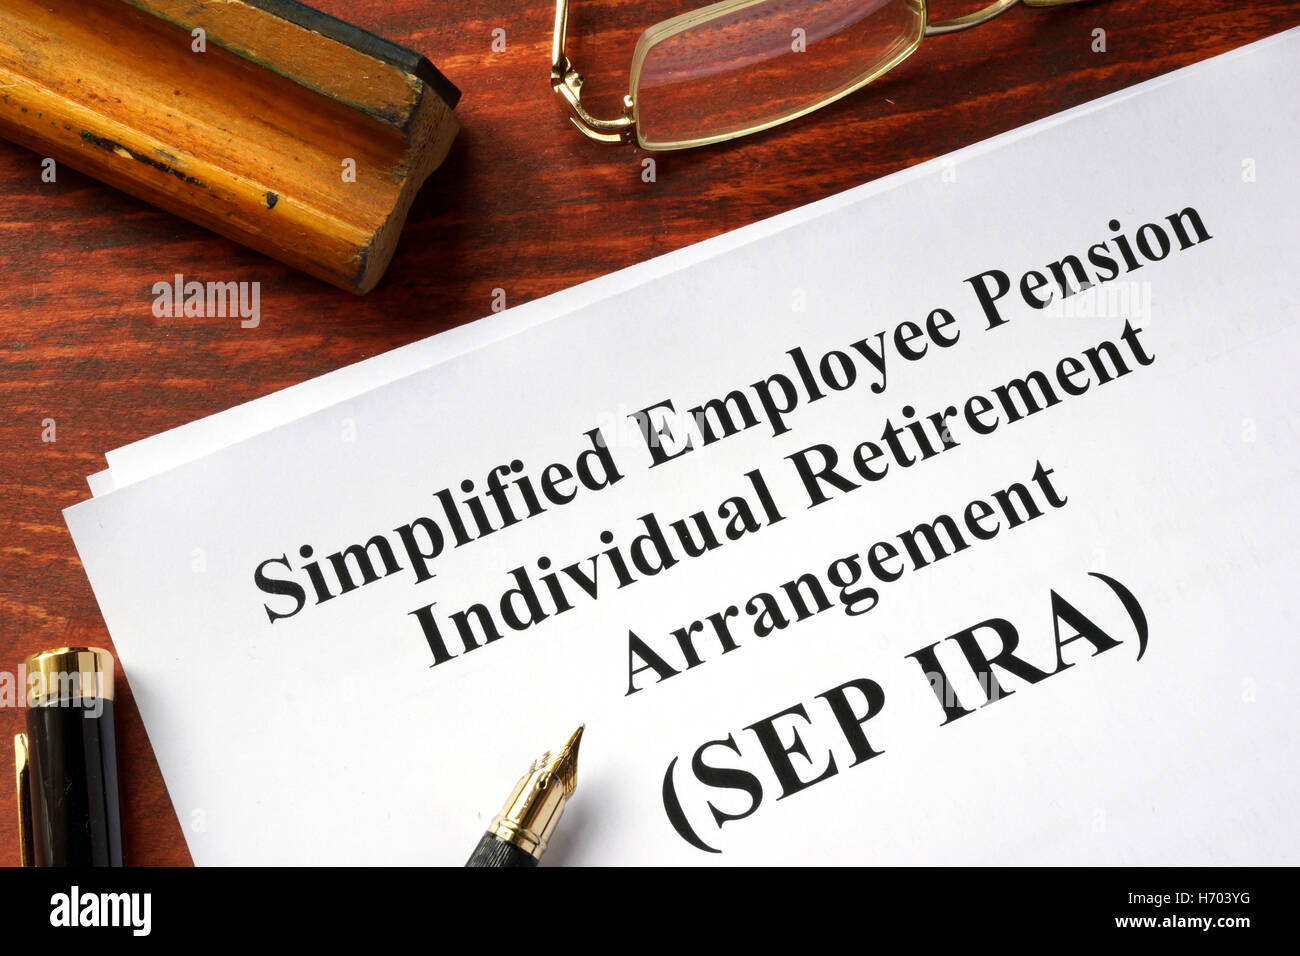 Simplified Employee Pension Individual Retirement Arrangement (SEP IRA) Stock Photo